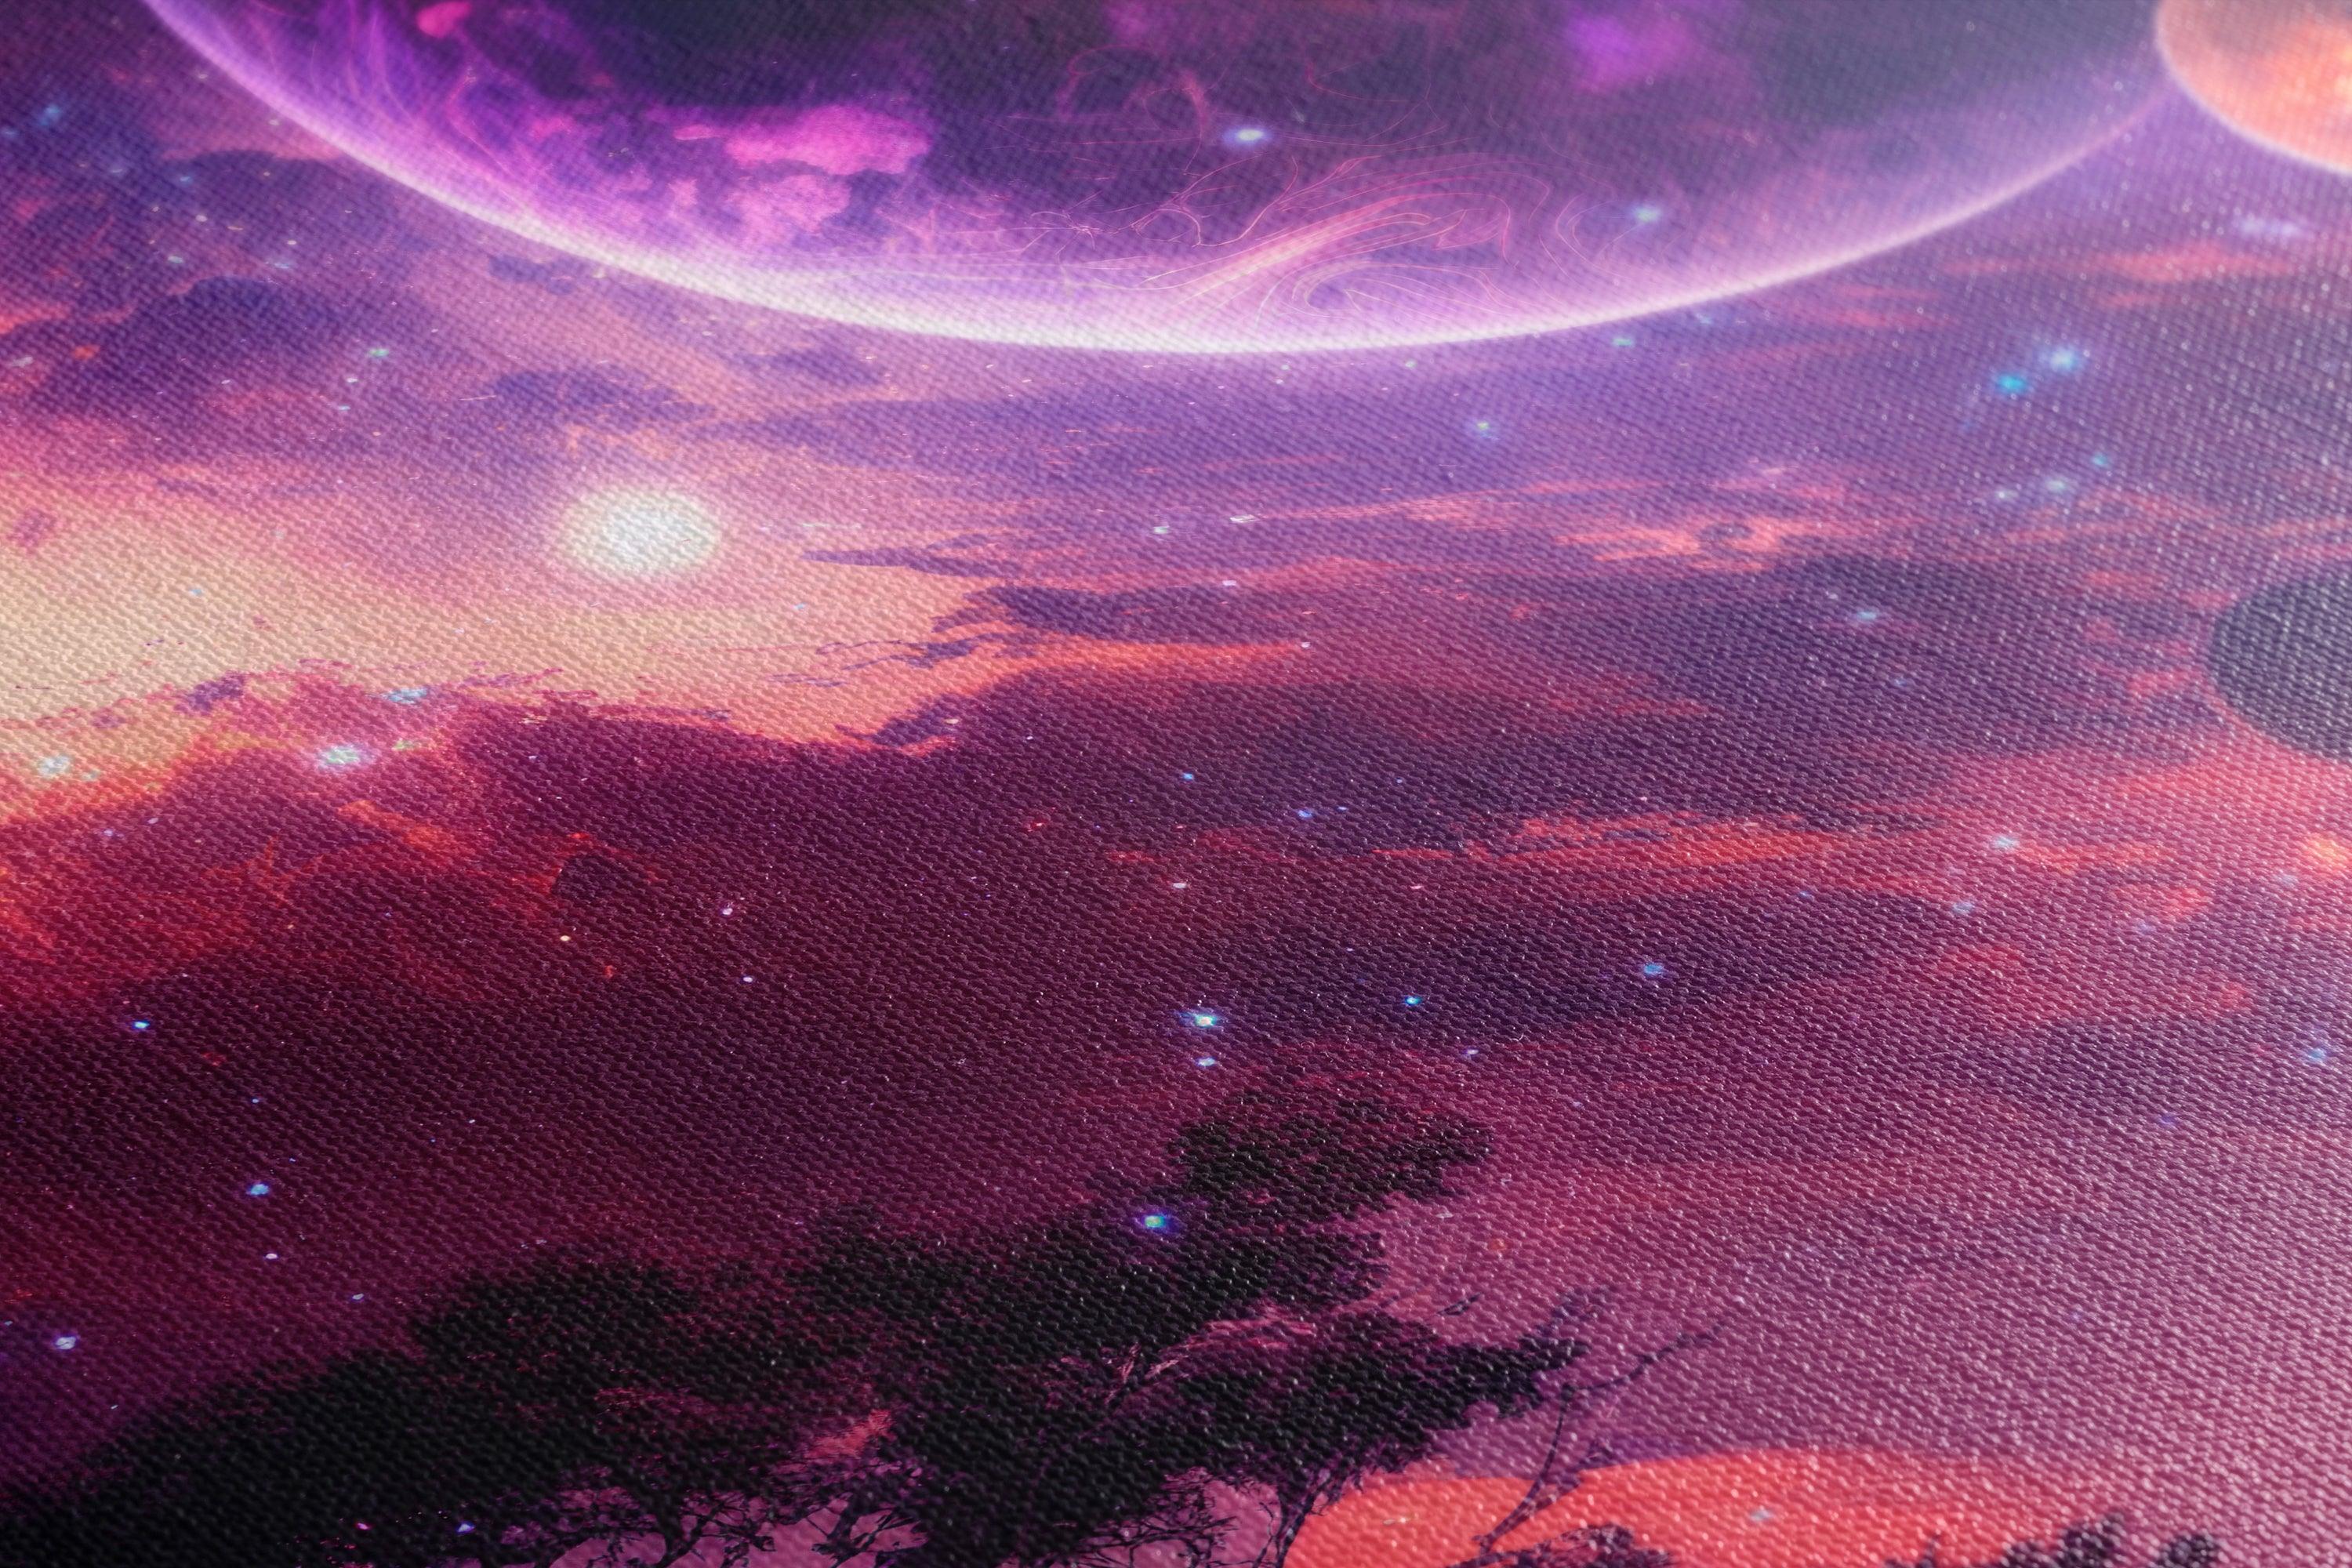 Futuristic Landscape with Dark Purple Galaxy - Canvas Print - Artoholica Ready to Hang Canvas Print